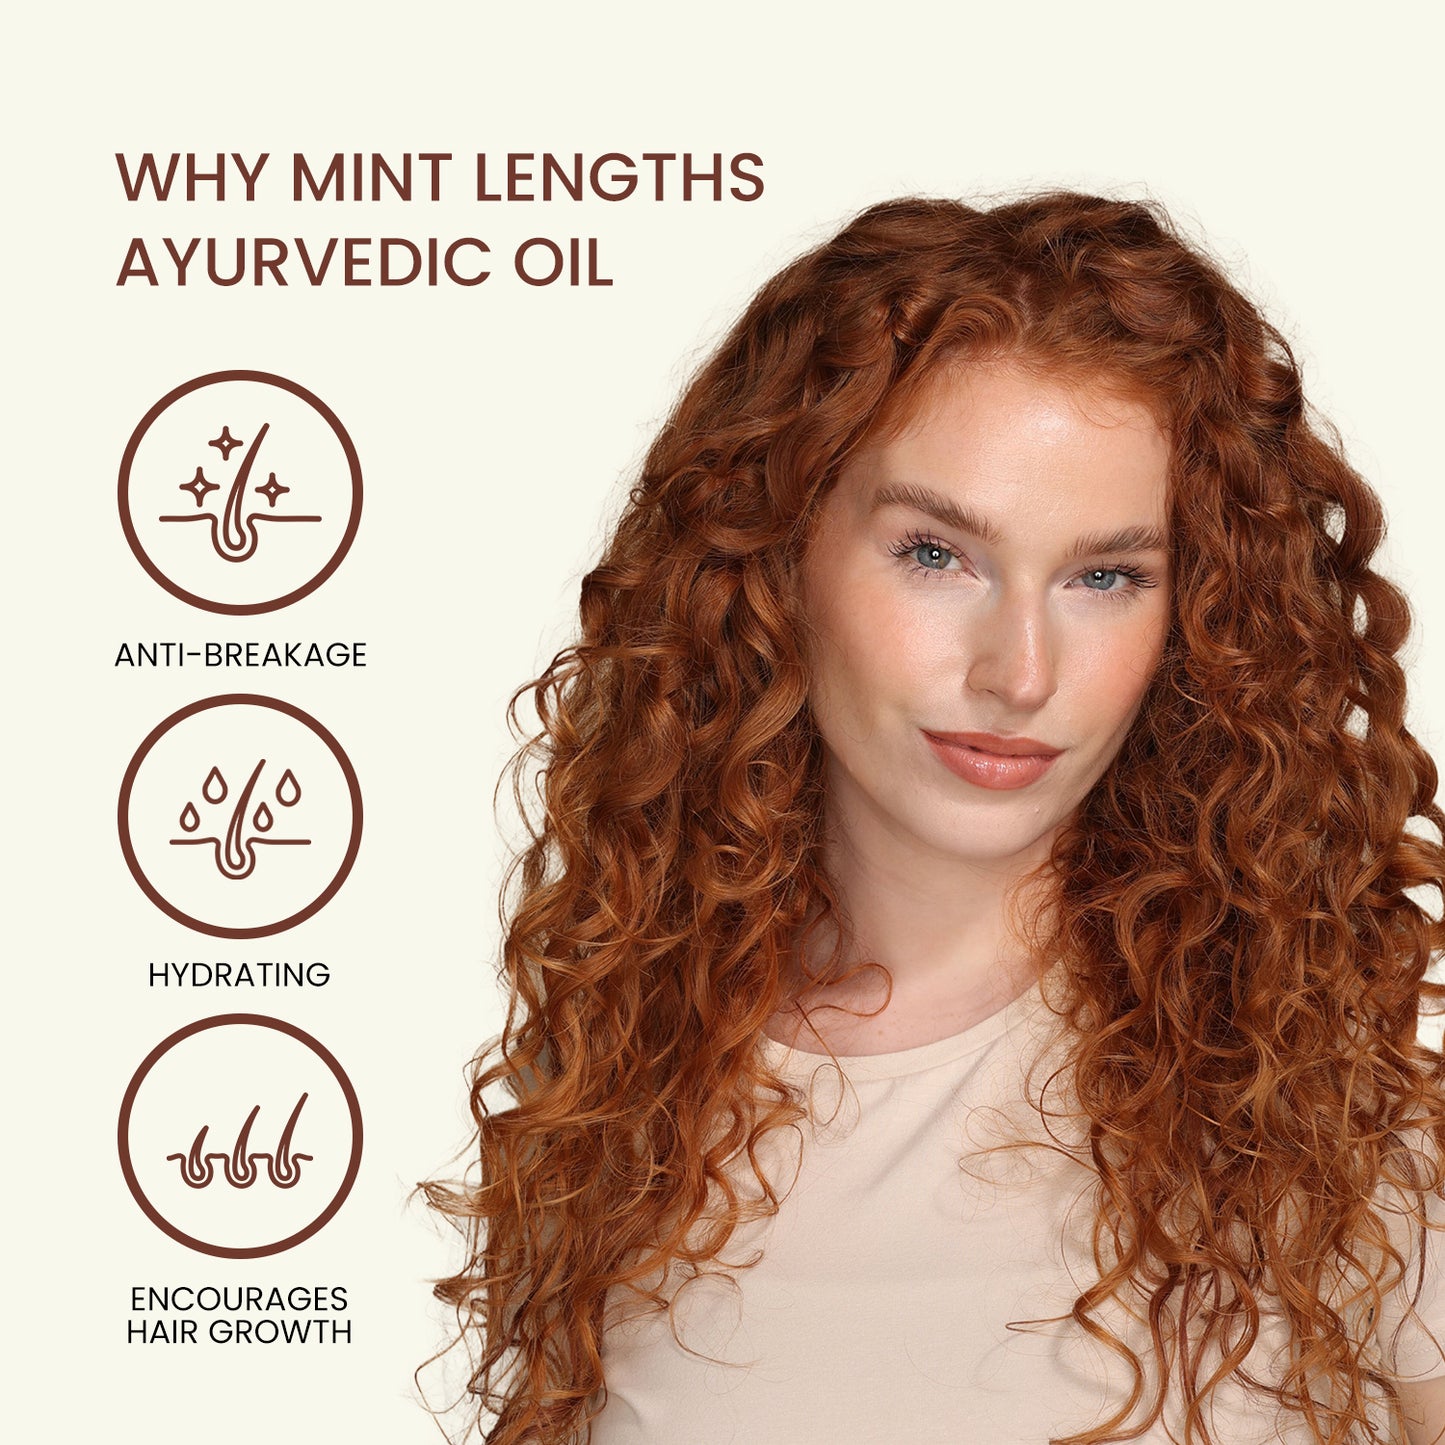 Mint Lengths Ayurvedic Oil